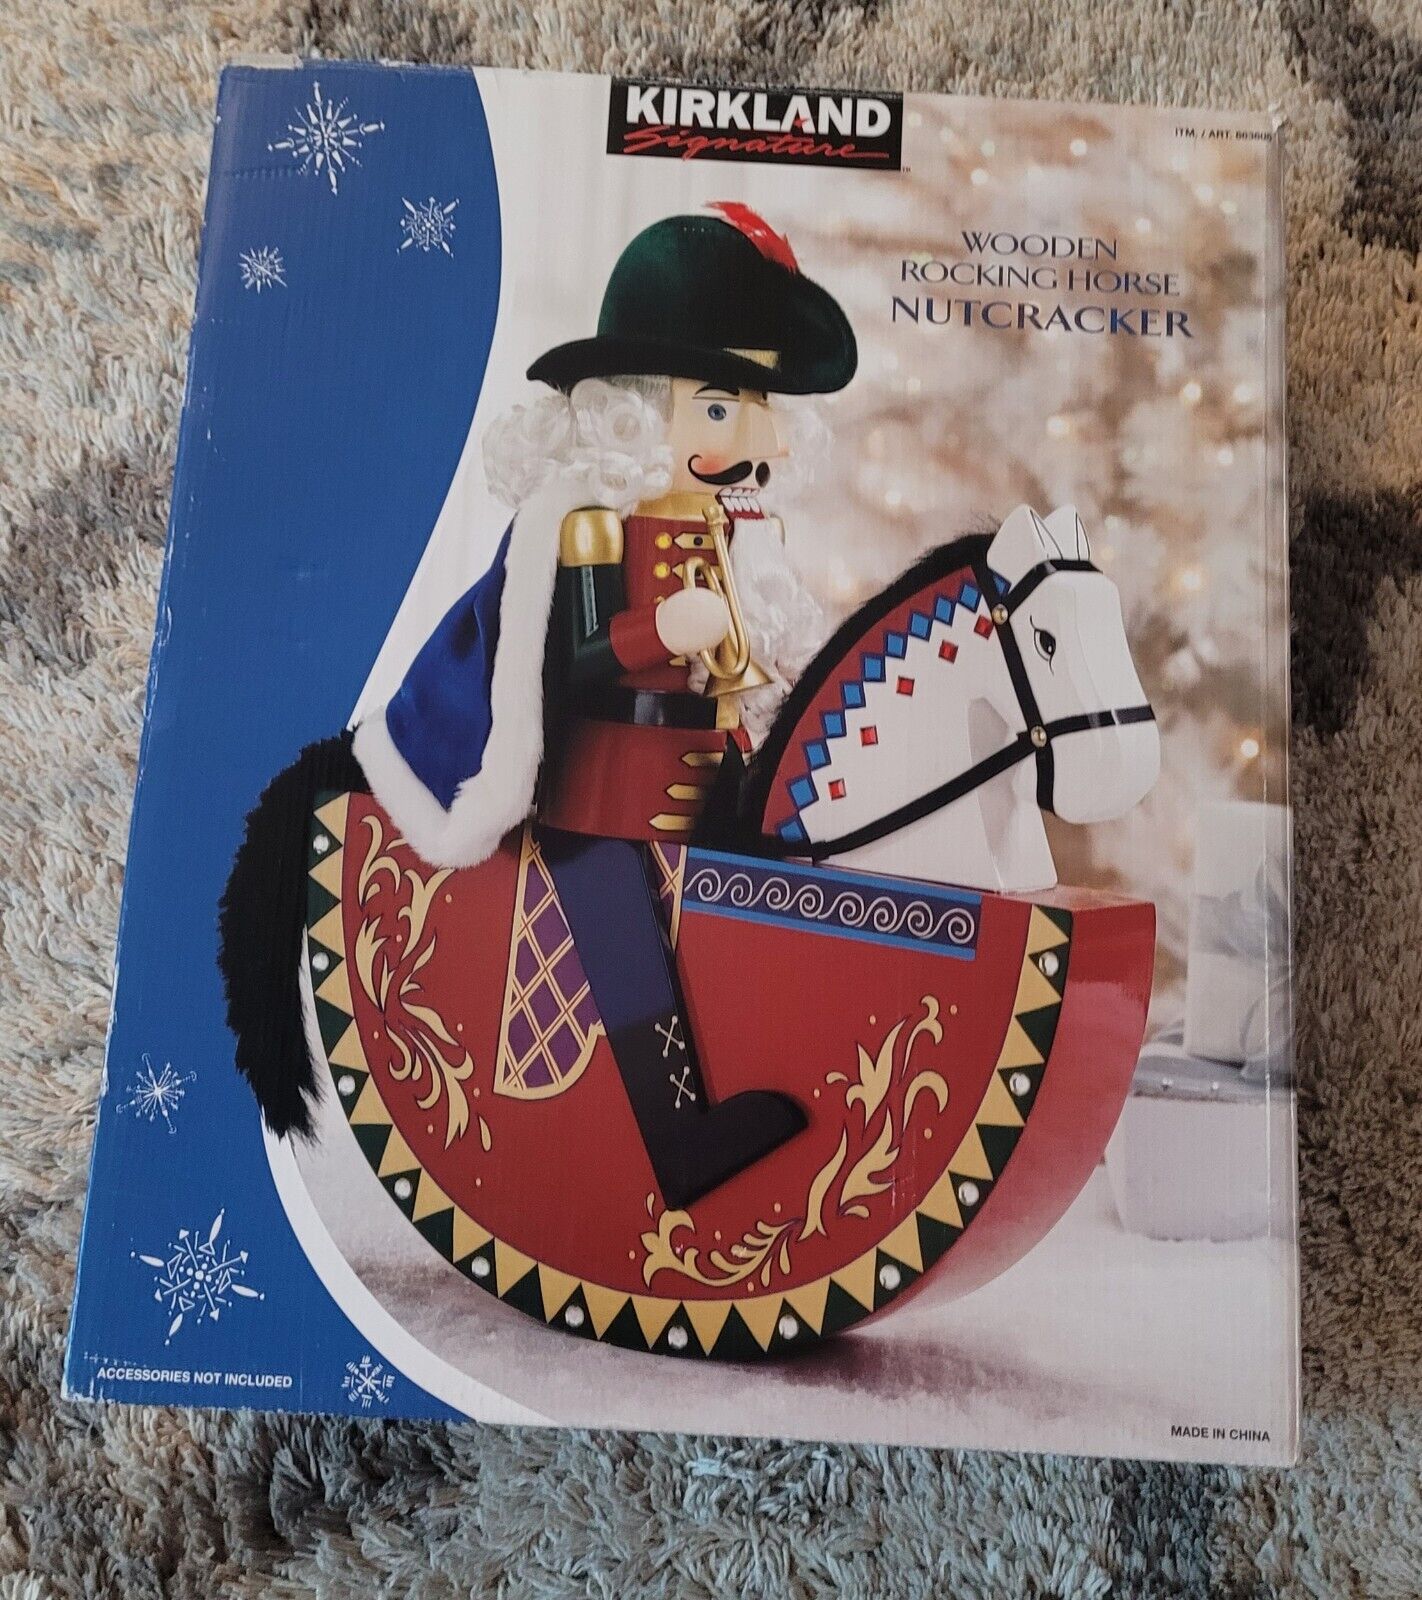 Kirkland Nutcracker Large Wooden Rocking Horse Christmas Decor Costco 18in